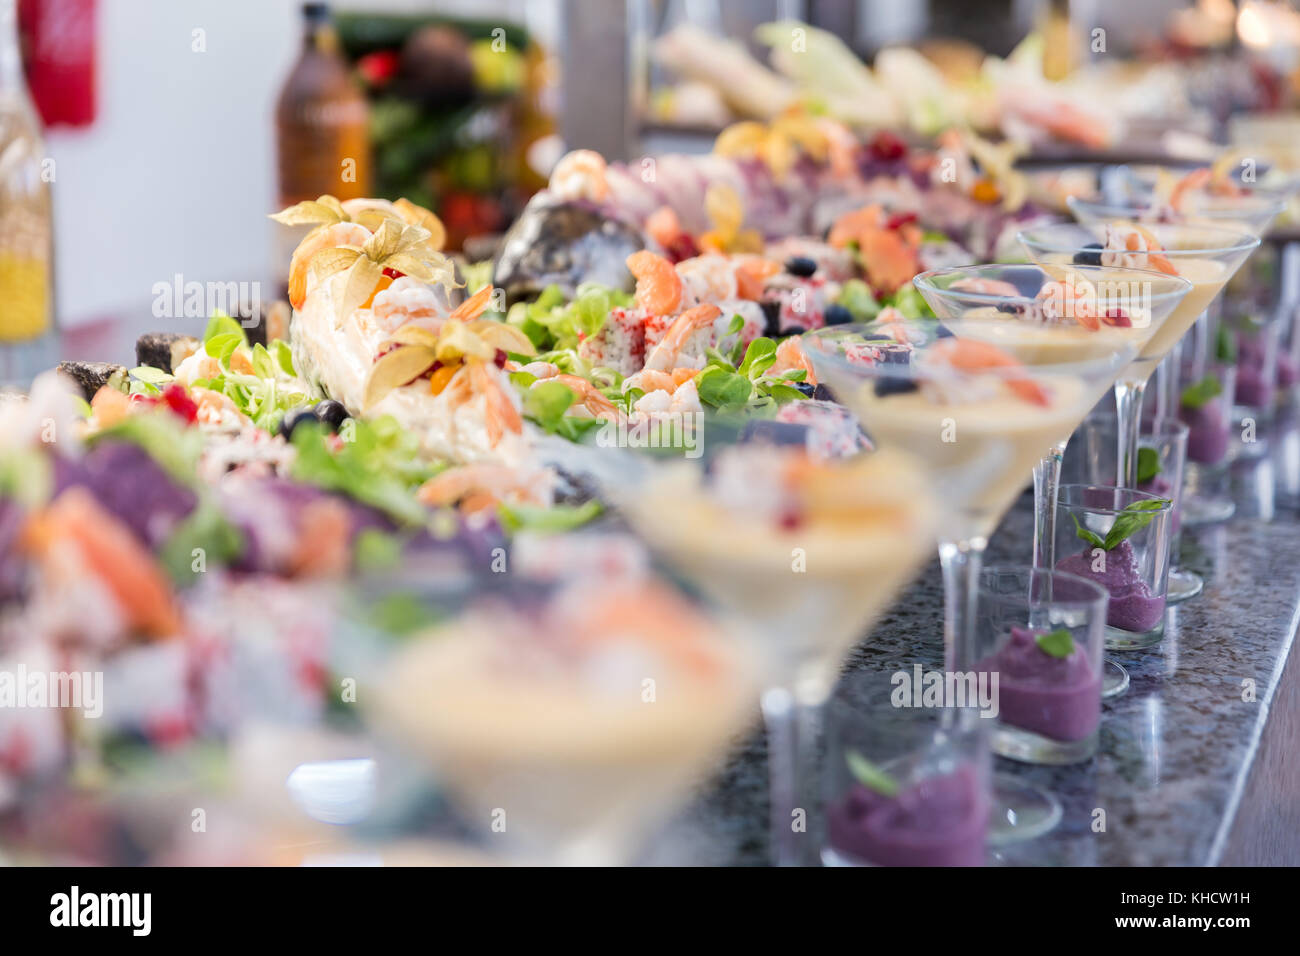 Cucina Asiatica a buffet in un hotel, california rotoli, pesce, insalate e i bicchieri con i gamberi in esso Foto Stock